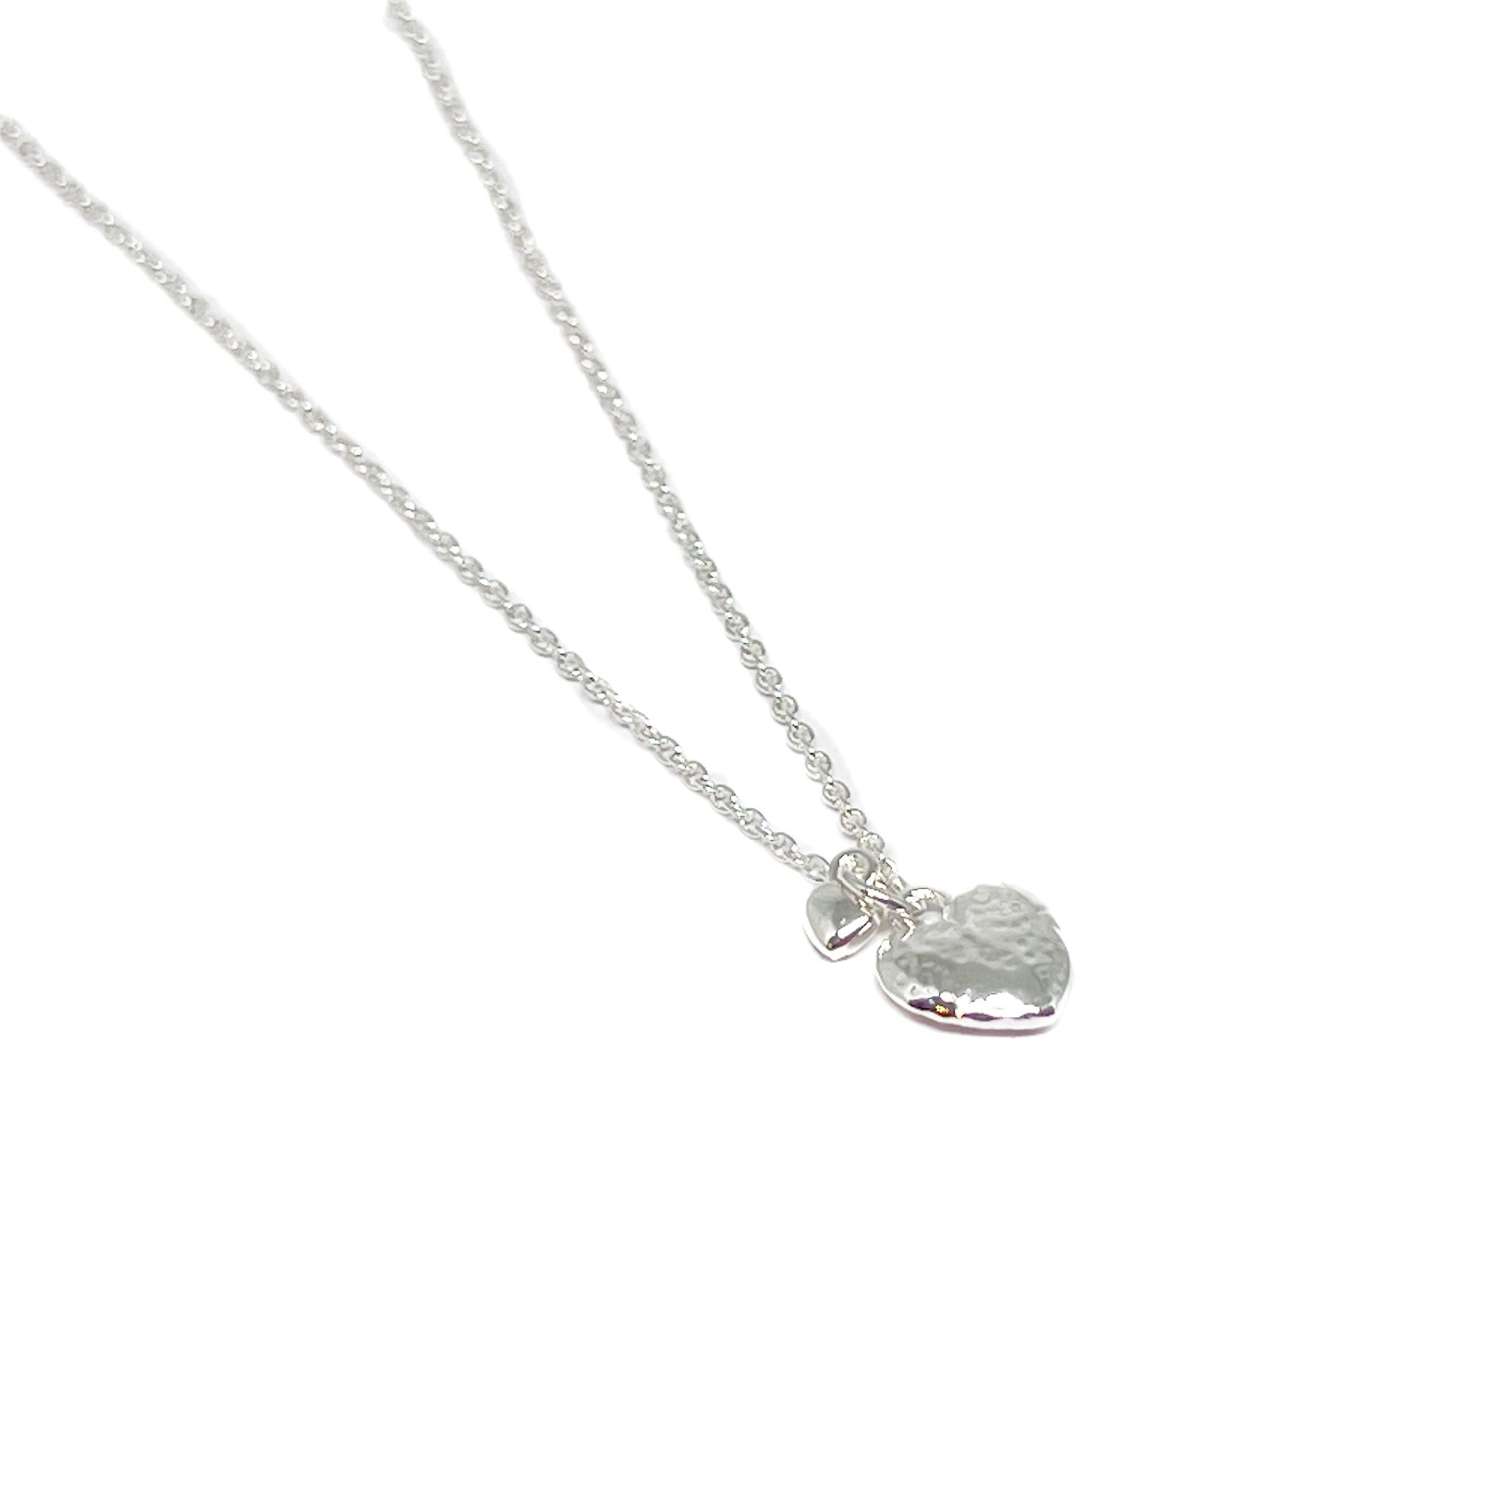 Nola Hammerede Heart Necklace - Silver